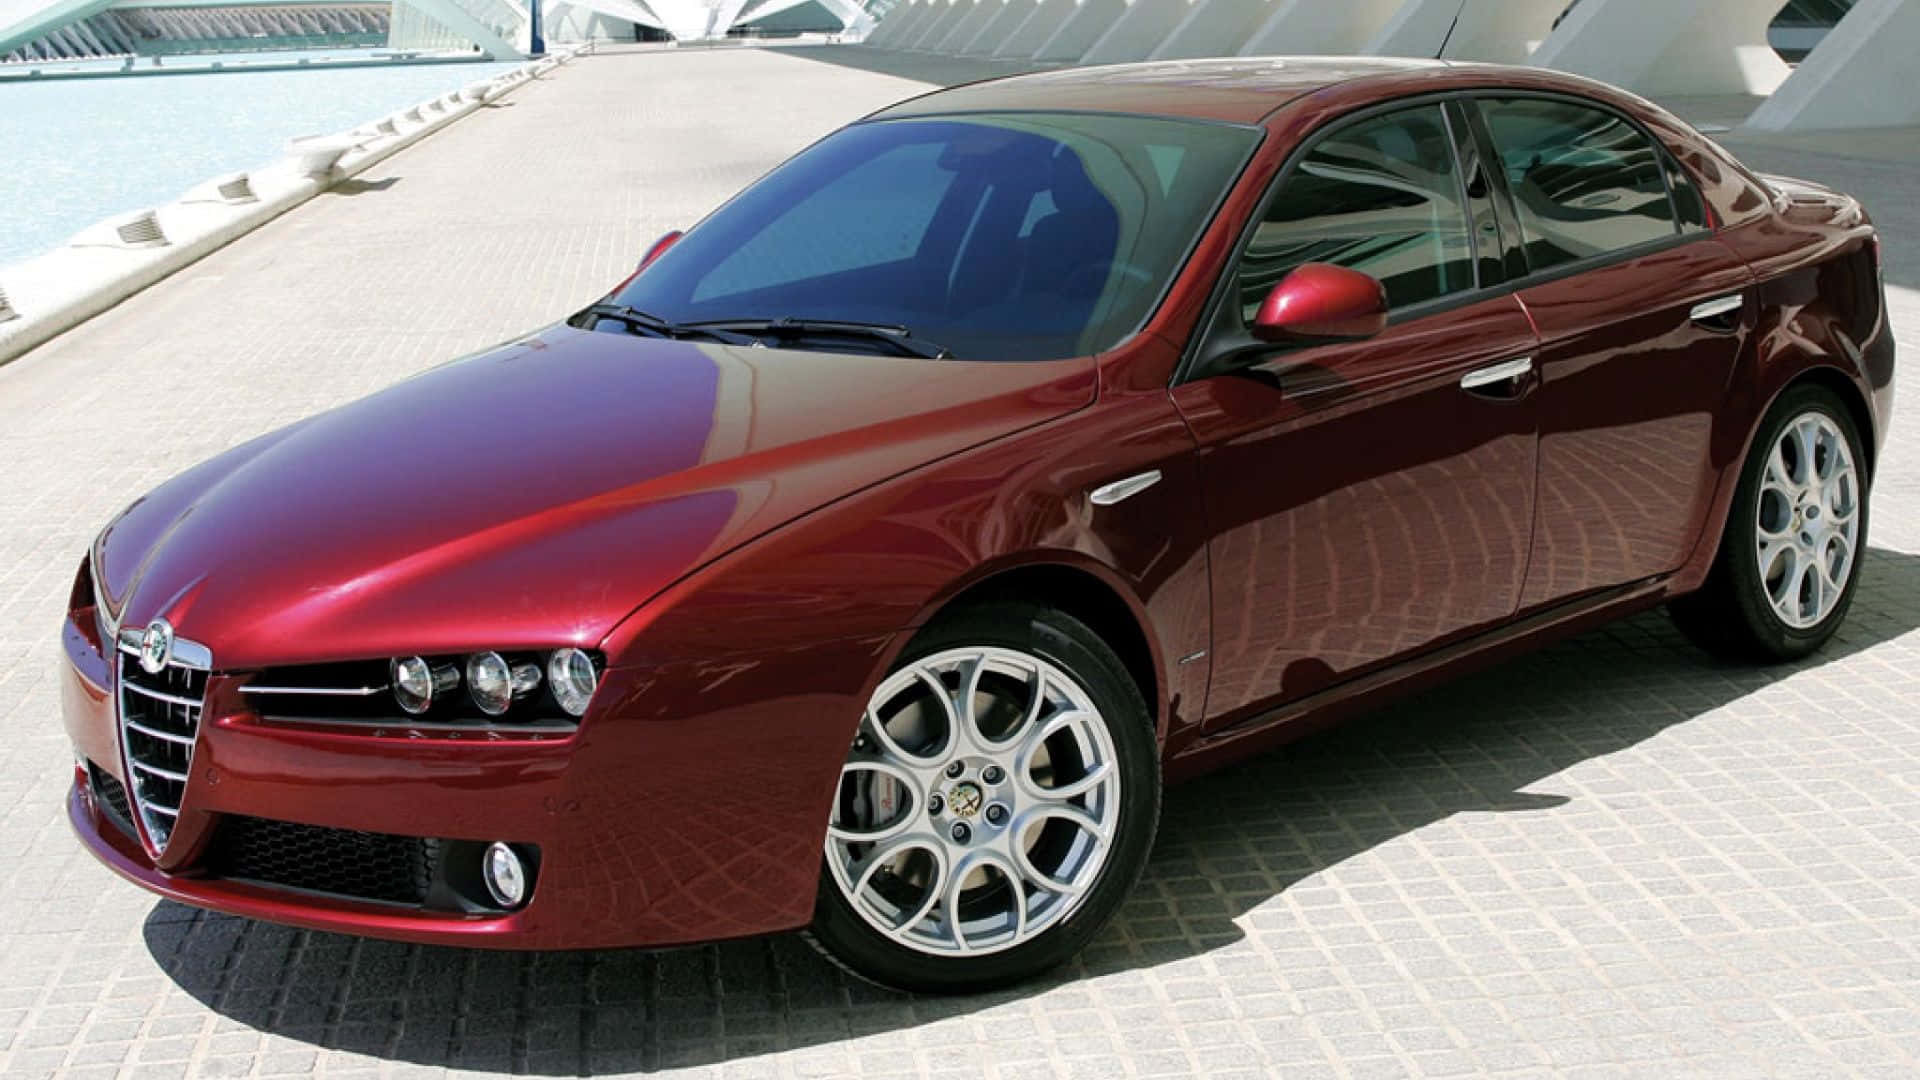 Alfa Romeo 159 Luxury Sports Sedan Driving on Road Wallpaper